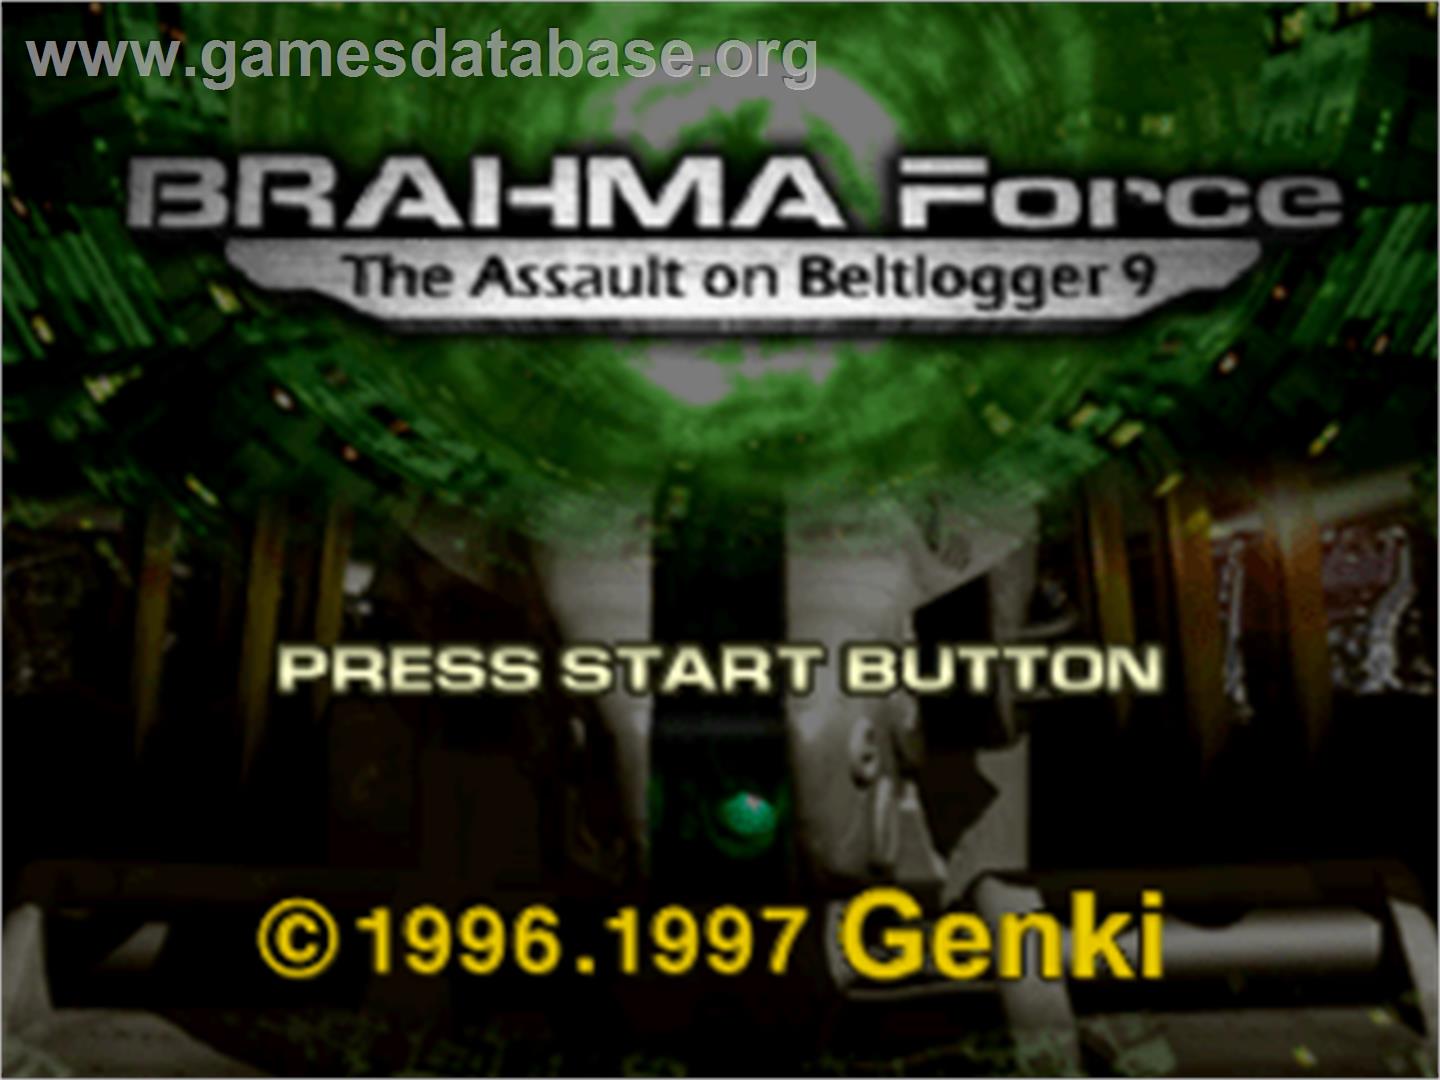 BRAHMA Force: The Assault on Beltlogger 9 - Sony Playstation - Artwork - Title Screen